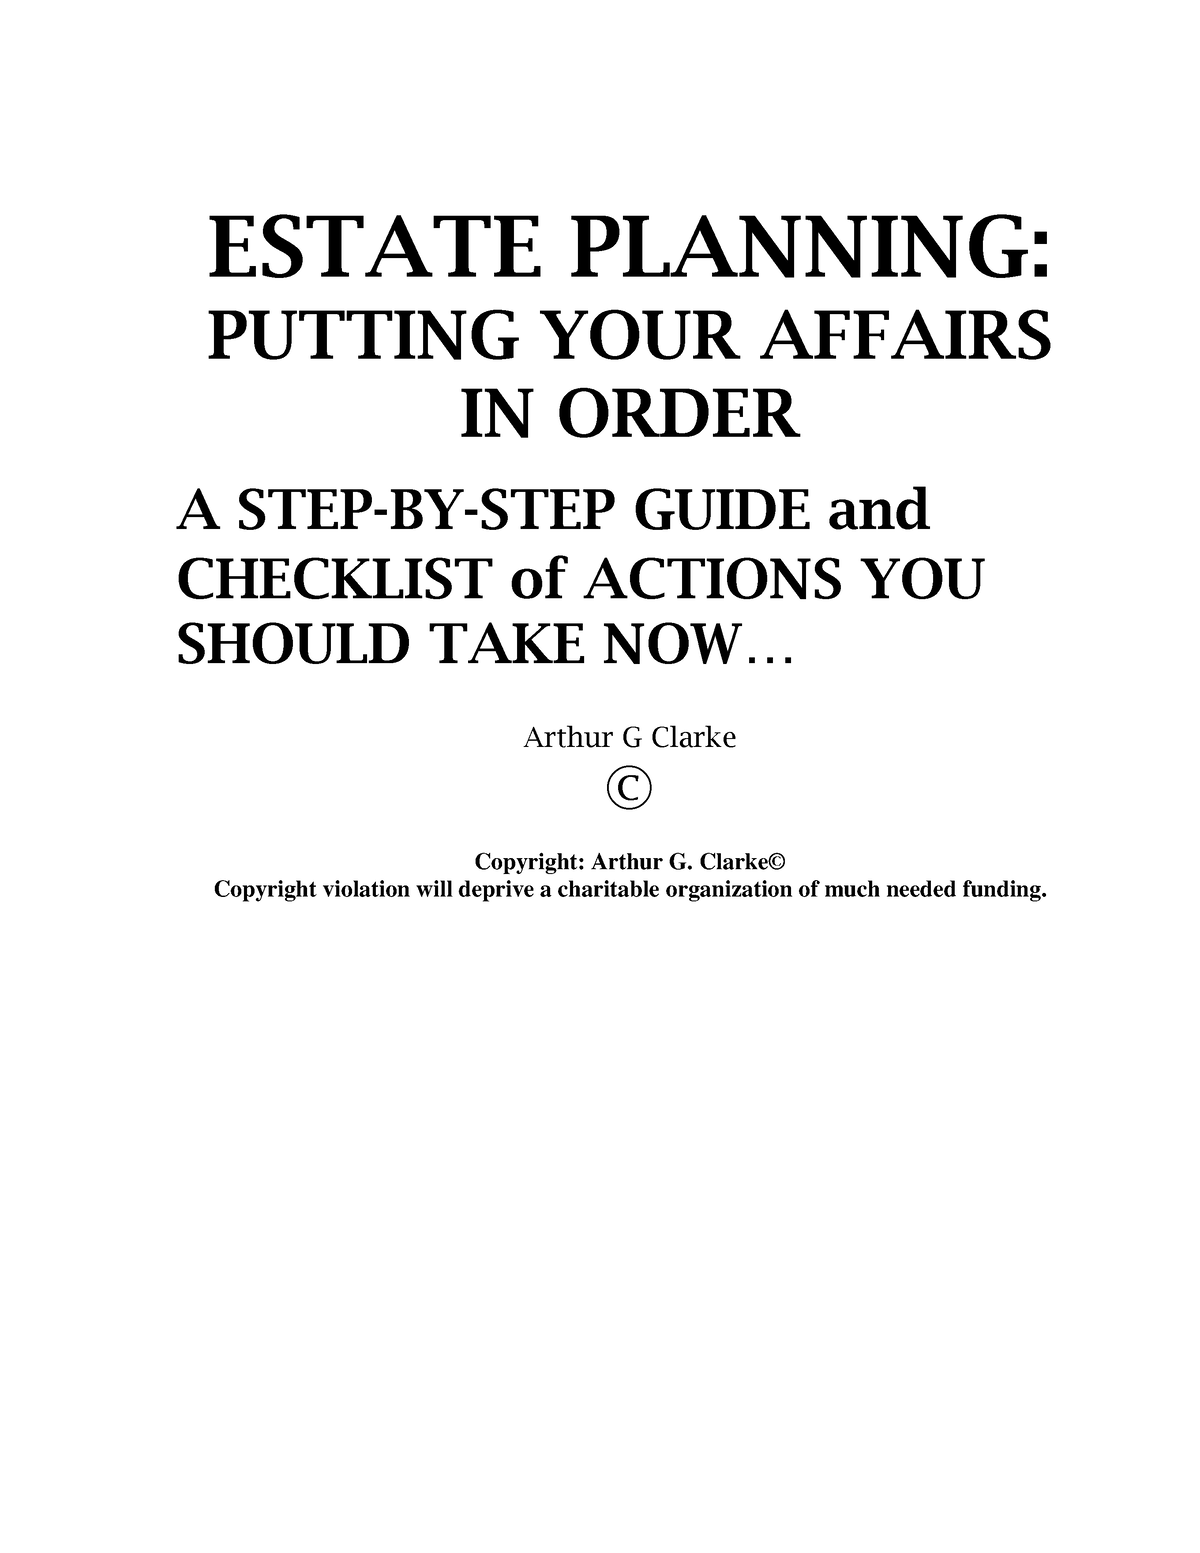 Estate Planning Putting your affairs in order by Arthur Clarke AF ...